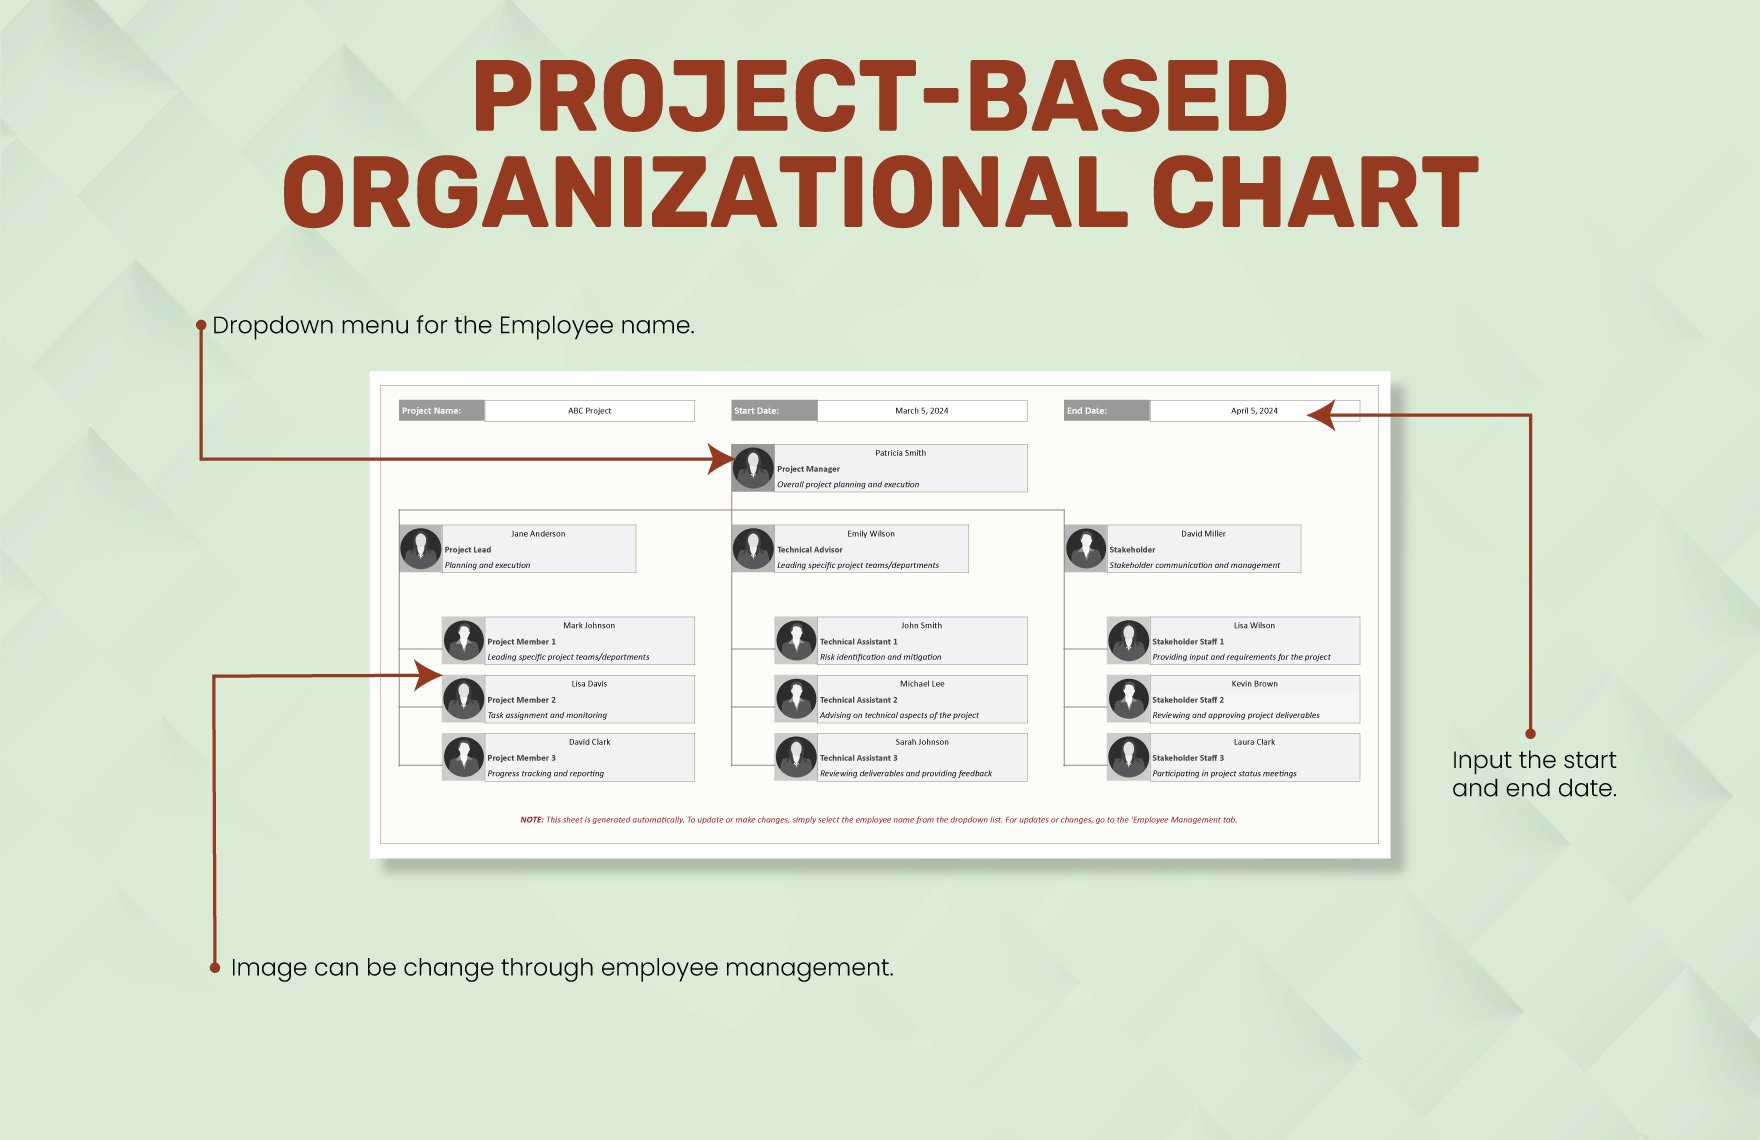 Project-Based Organizational Chart Template